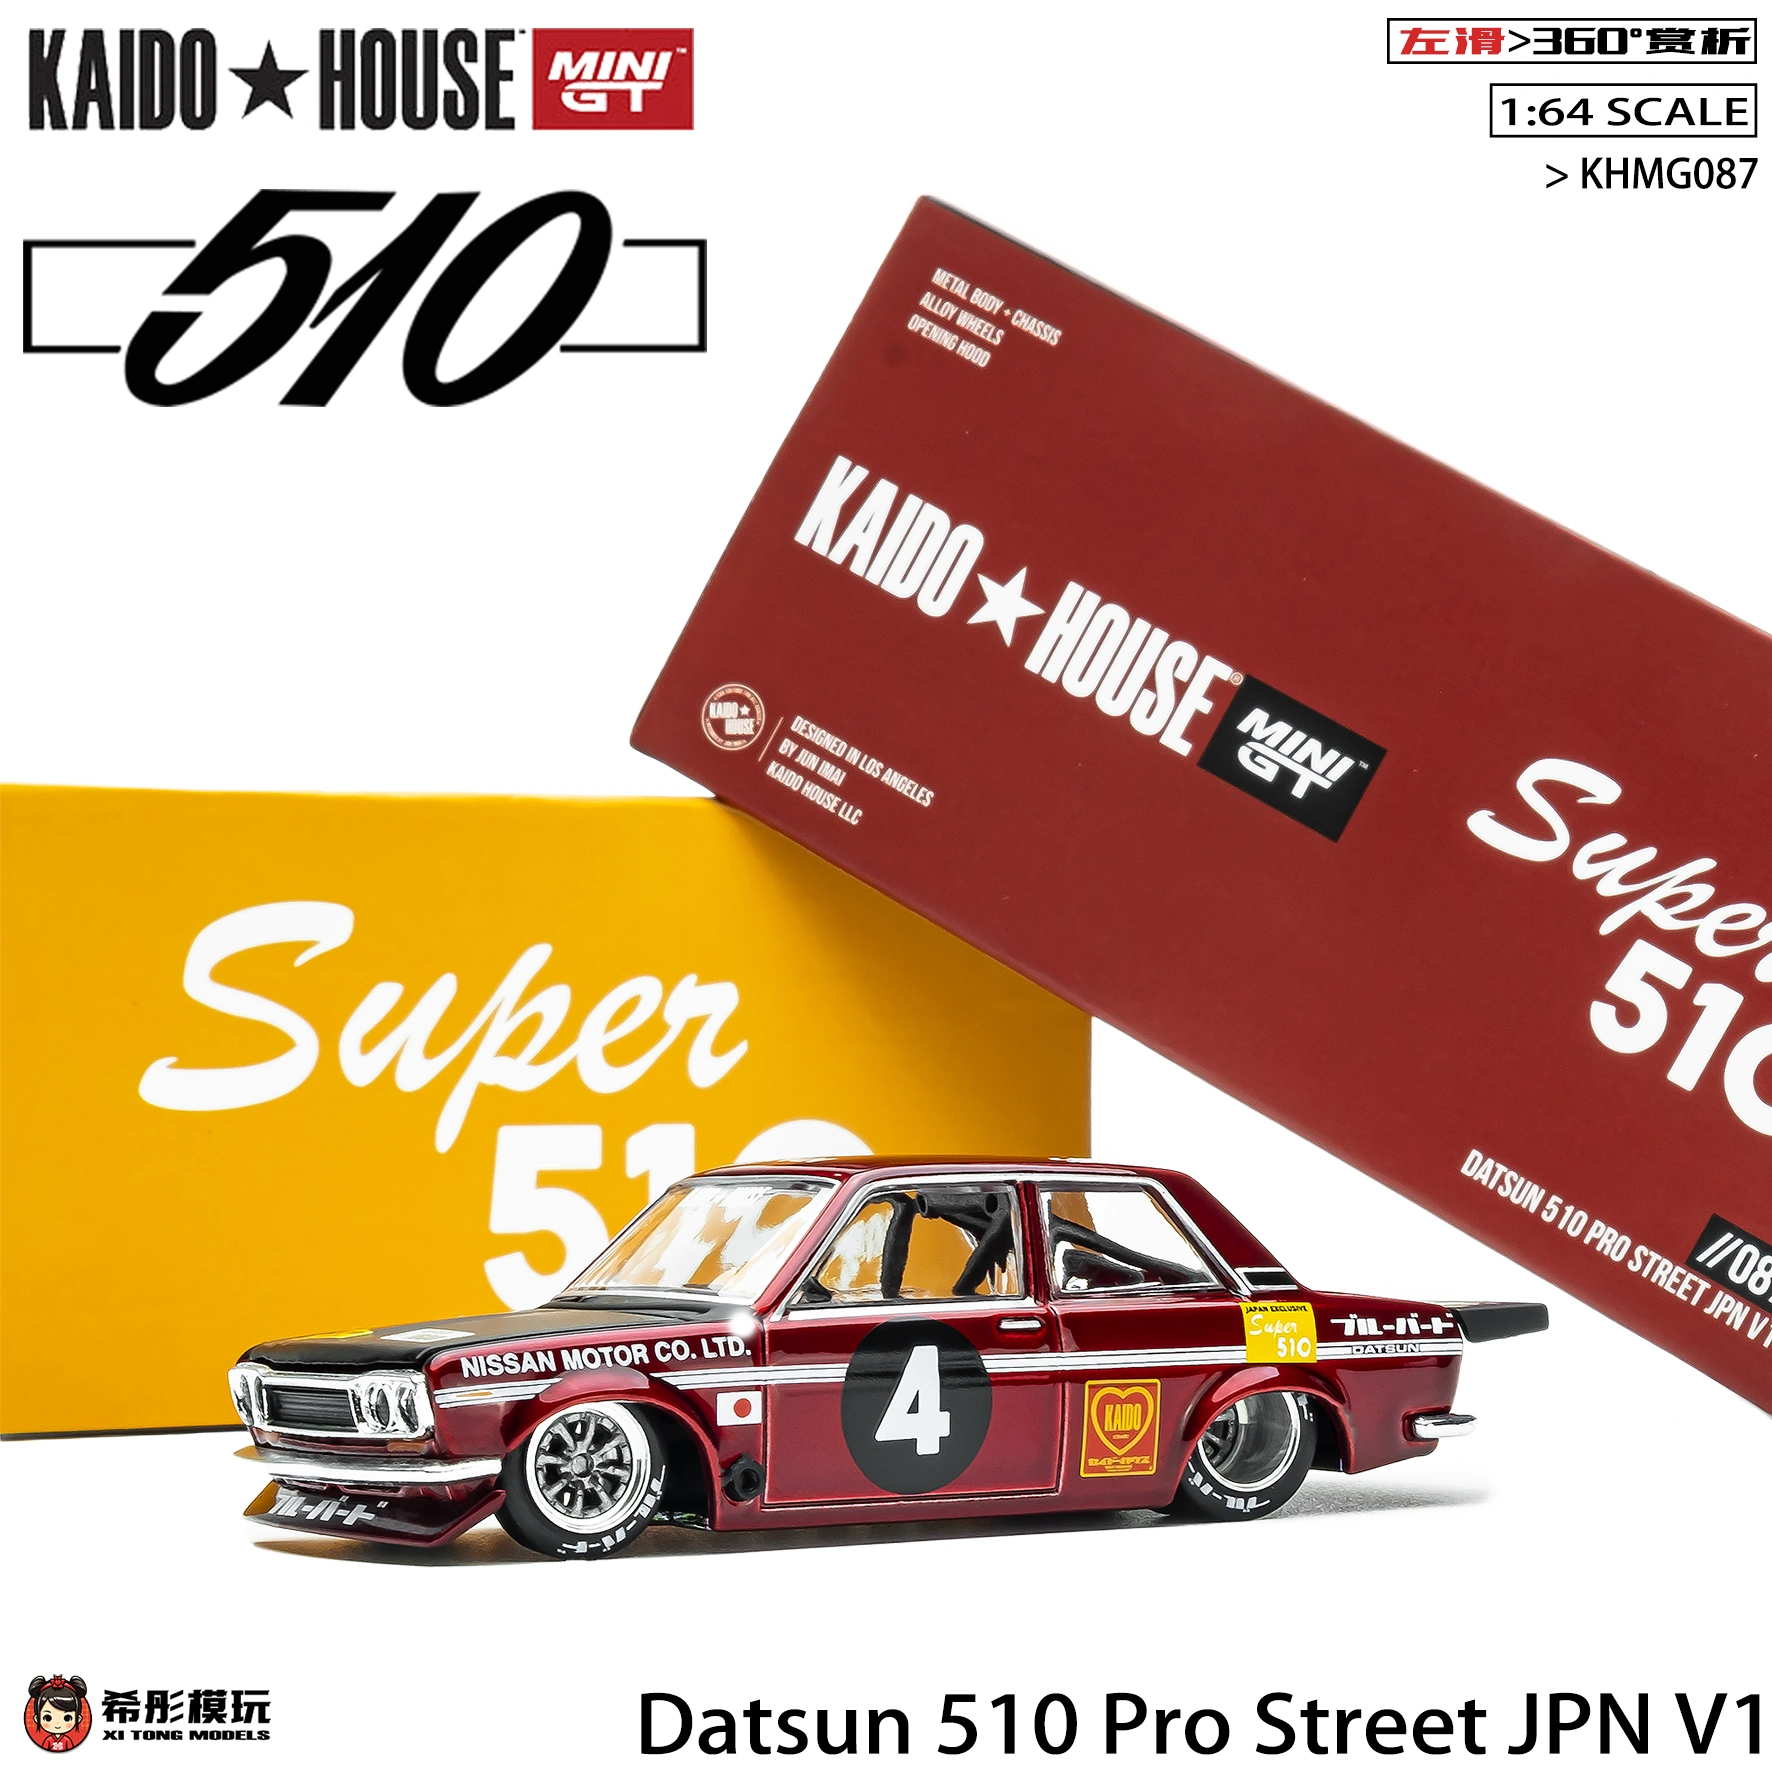 Kaido GT Datsun 510 Pro Street JPN V1 – KAIDO HOUSE LLC